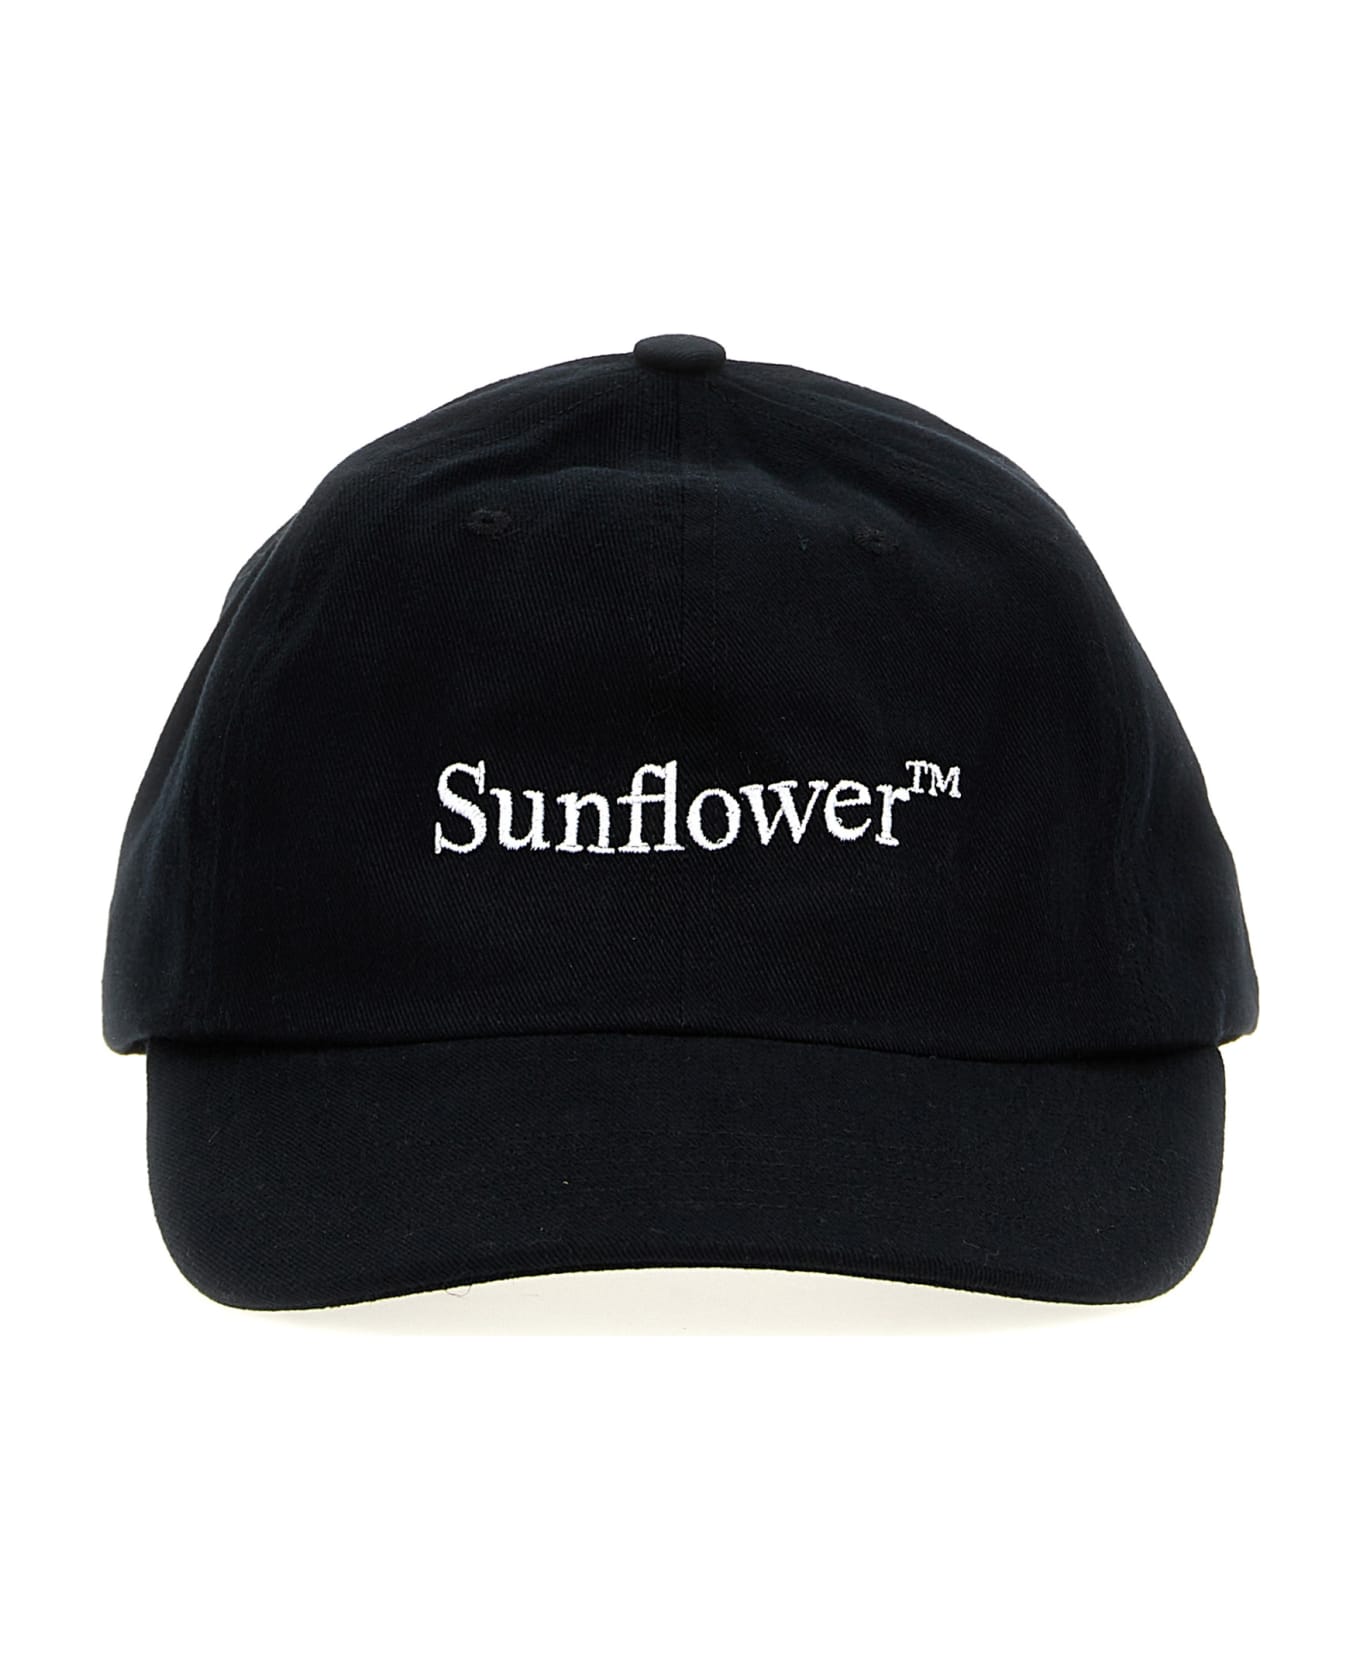 Sunflower Logo Embroidery Cap - Black   帽子